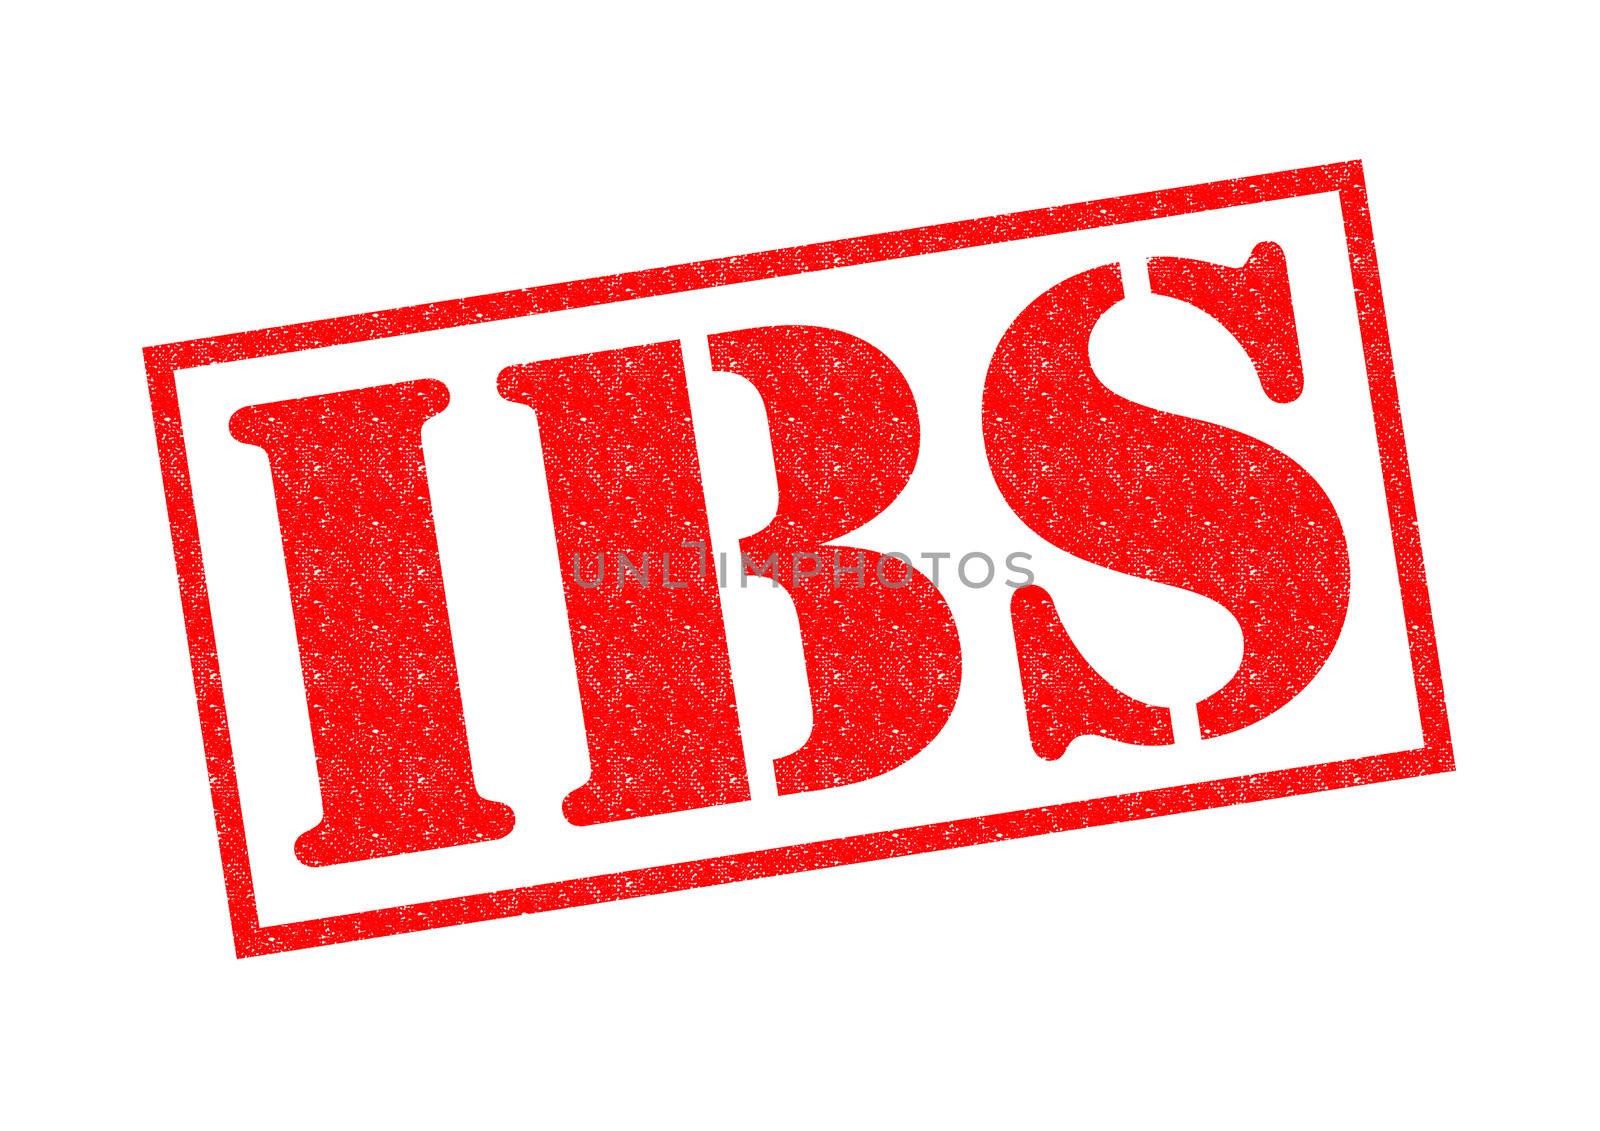 IBS Rubber Stamp by chrisdorney